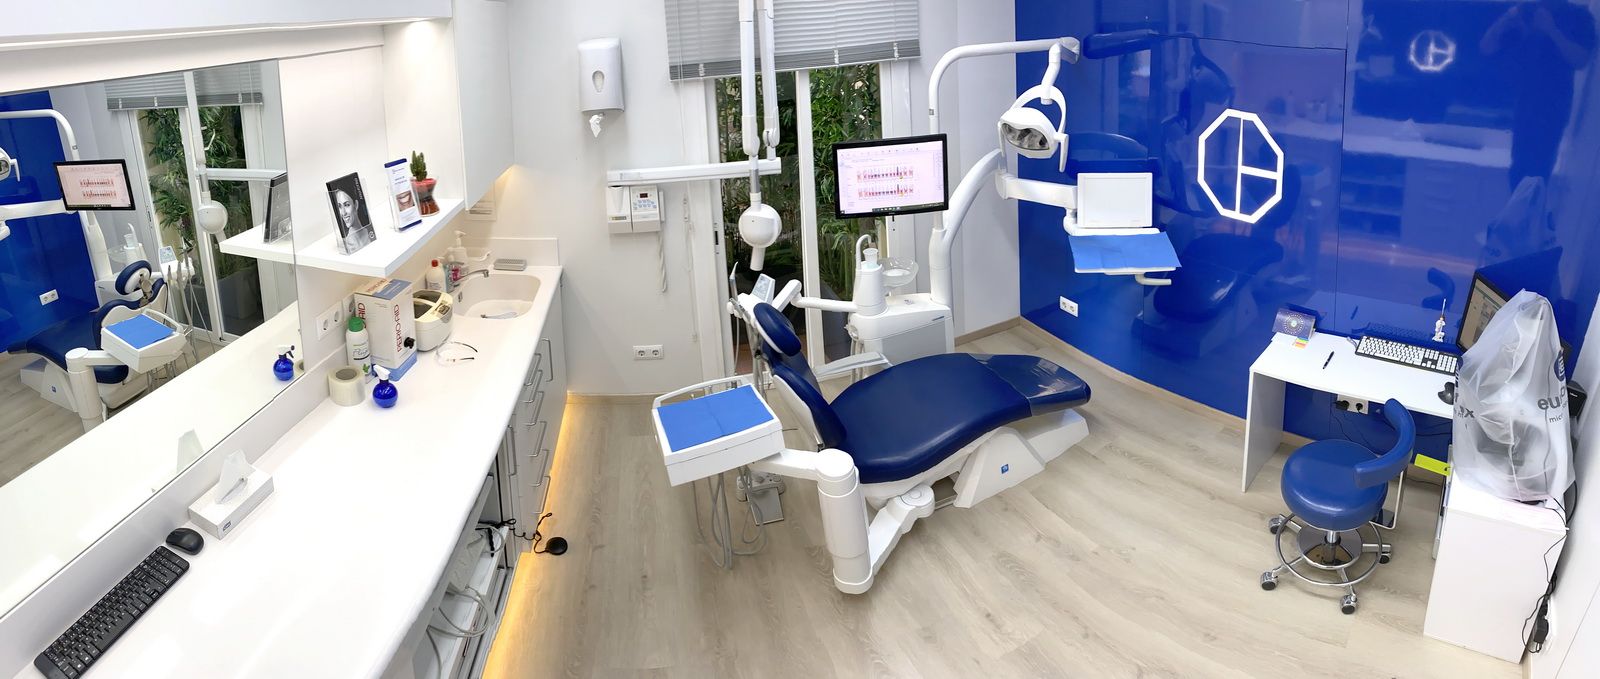 Dental clinic Padrós, your dental clinic in Barcelona